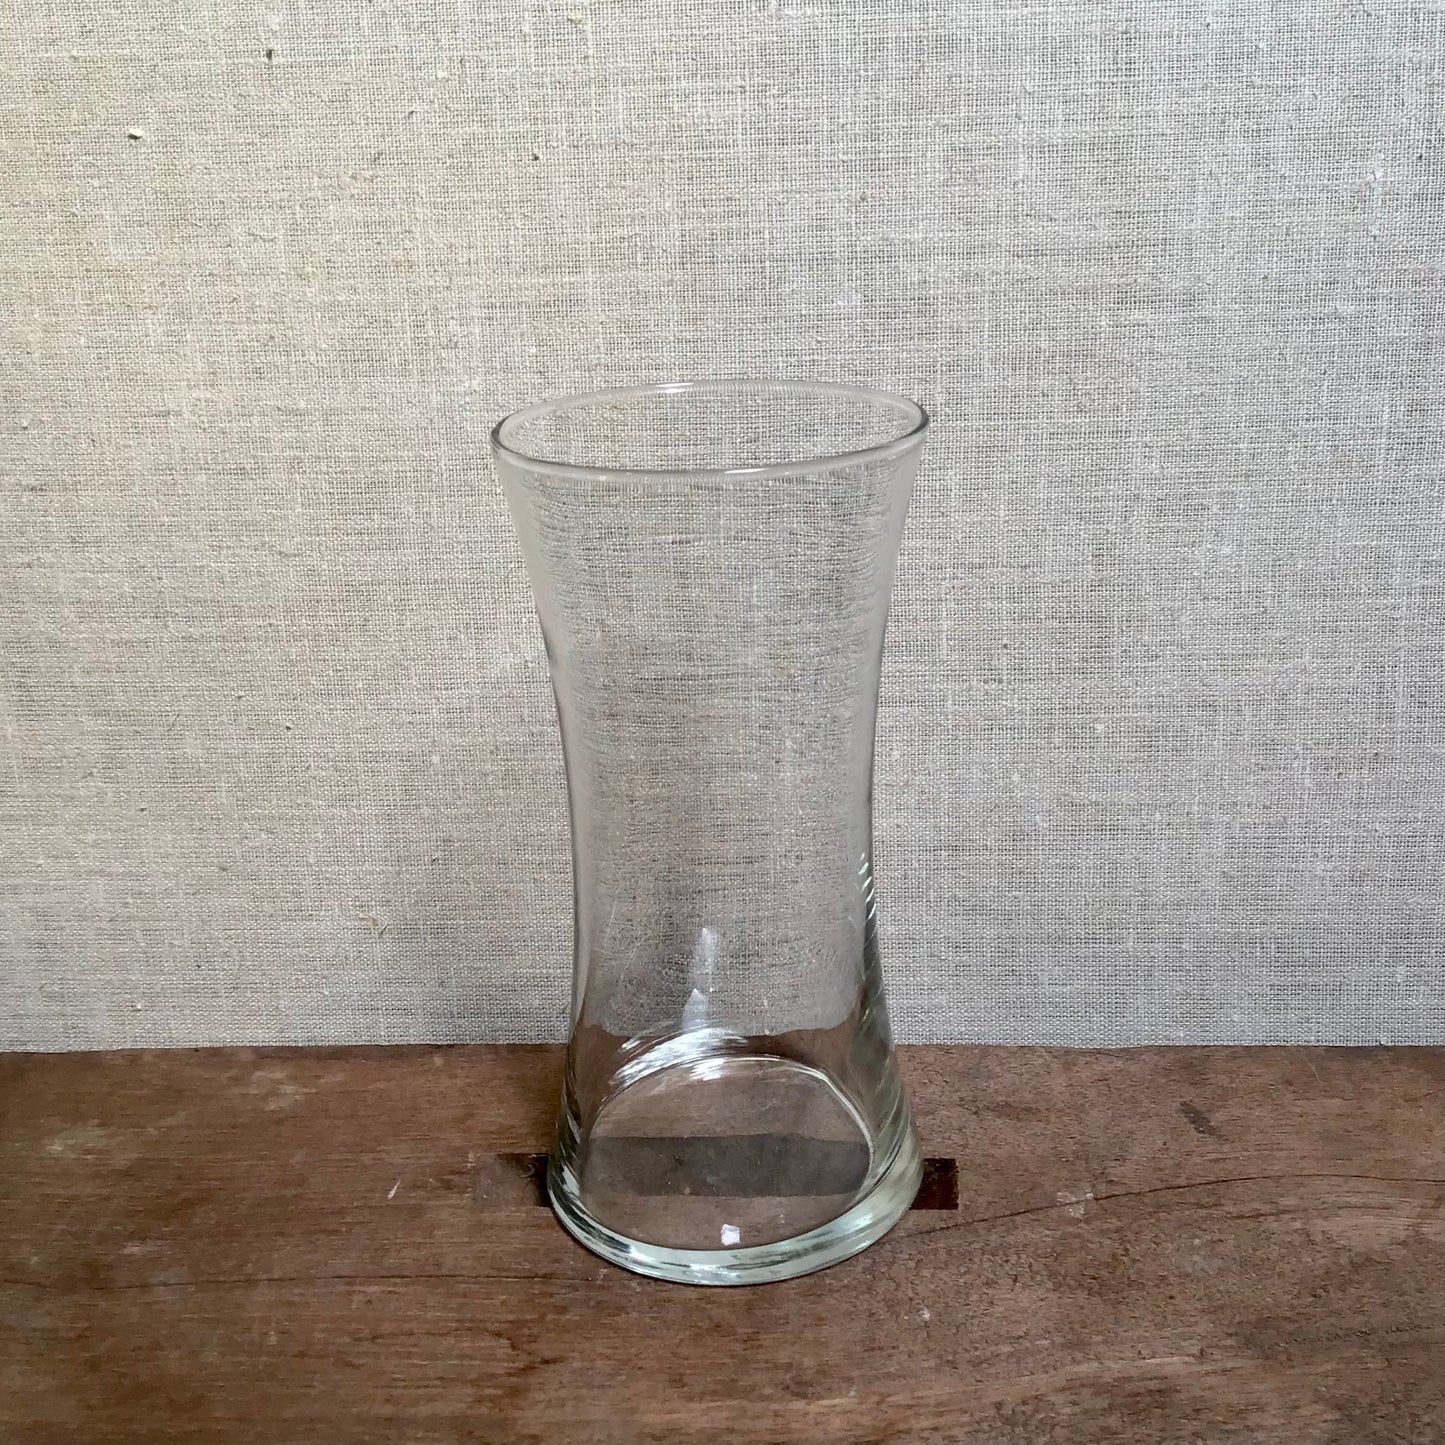 Add: Glass Vase